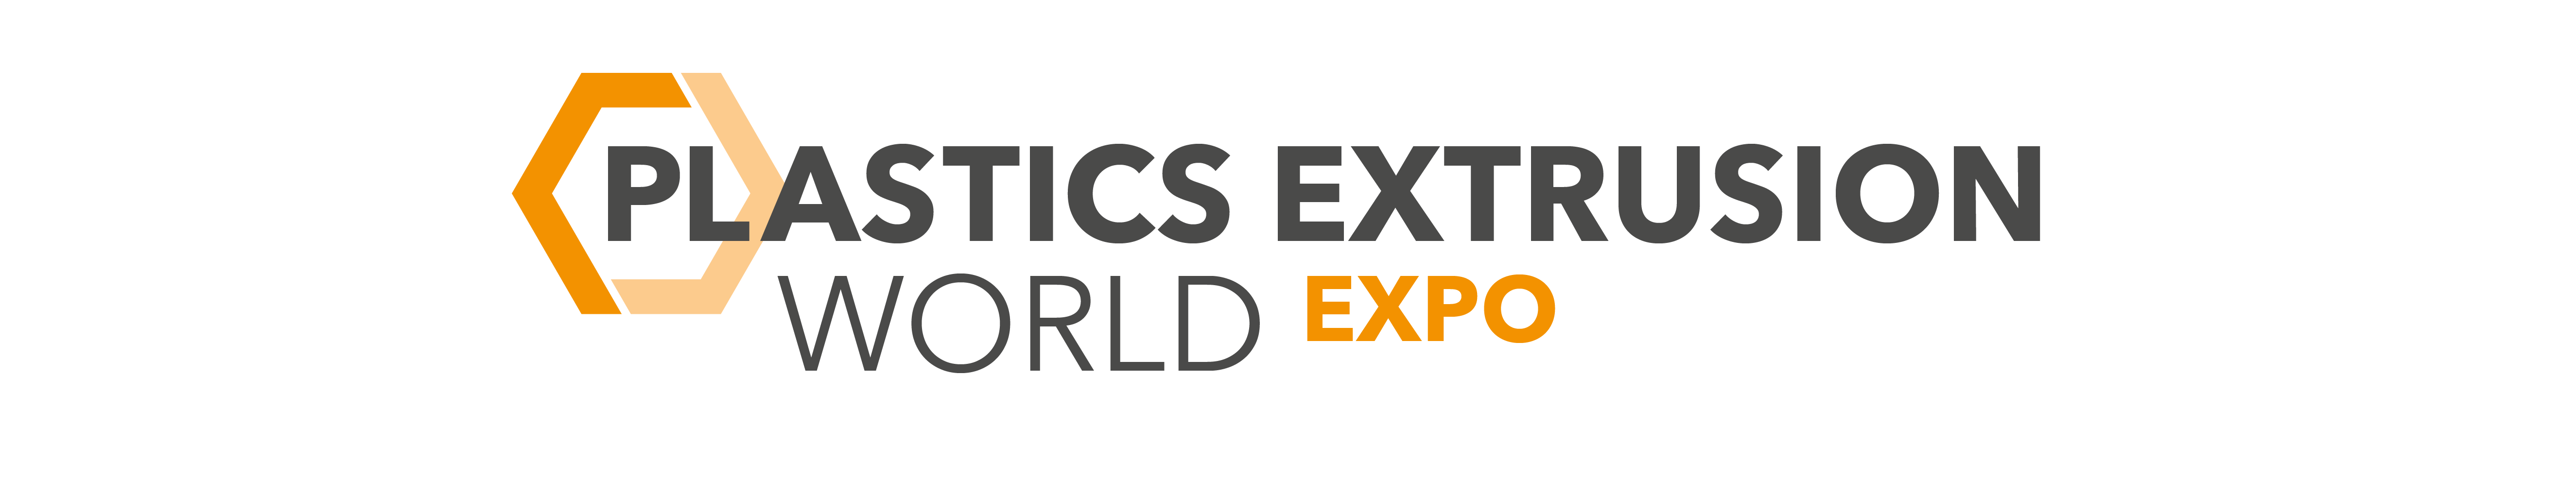 Plastics Extrusion World Expo